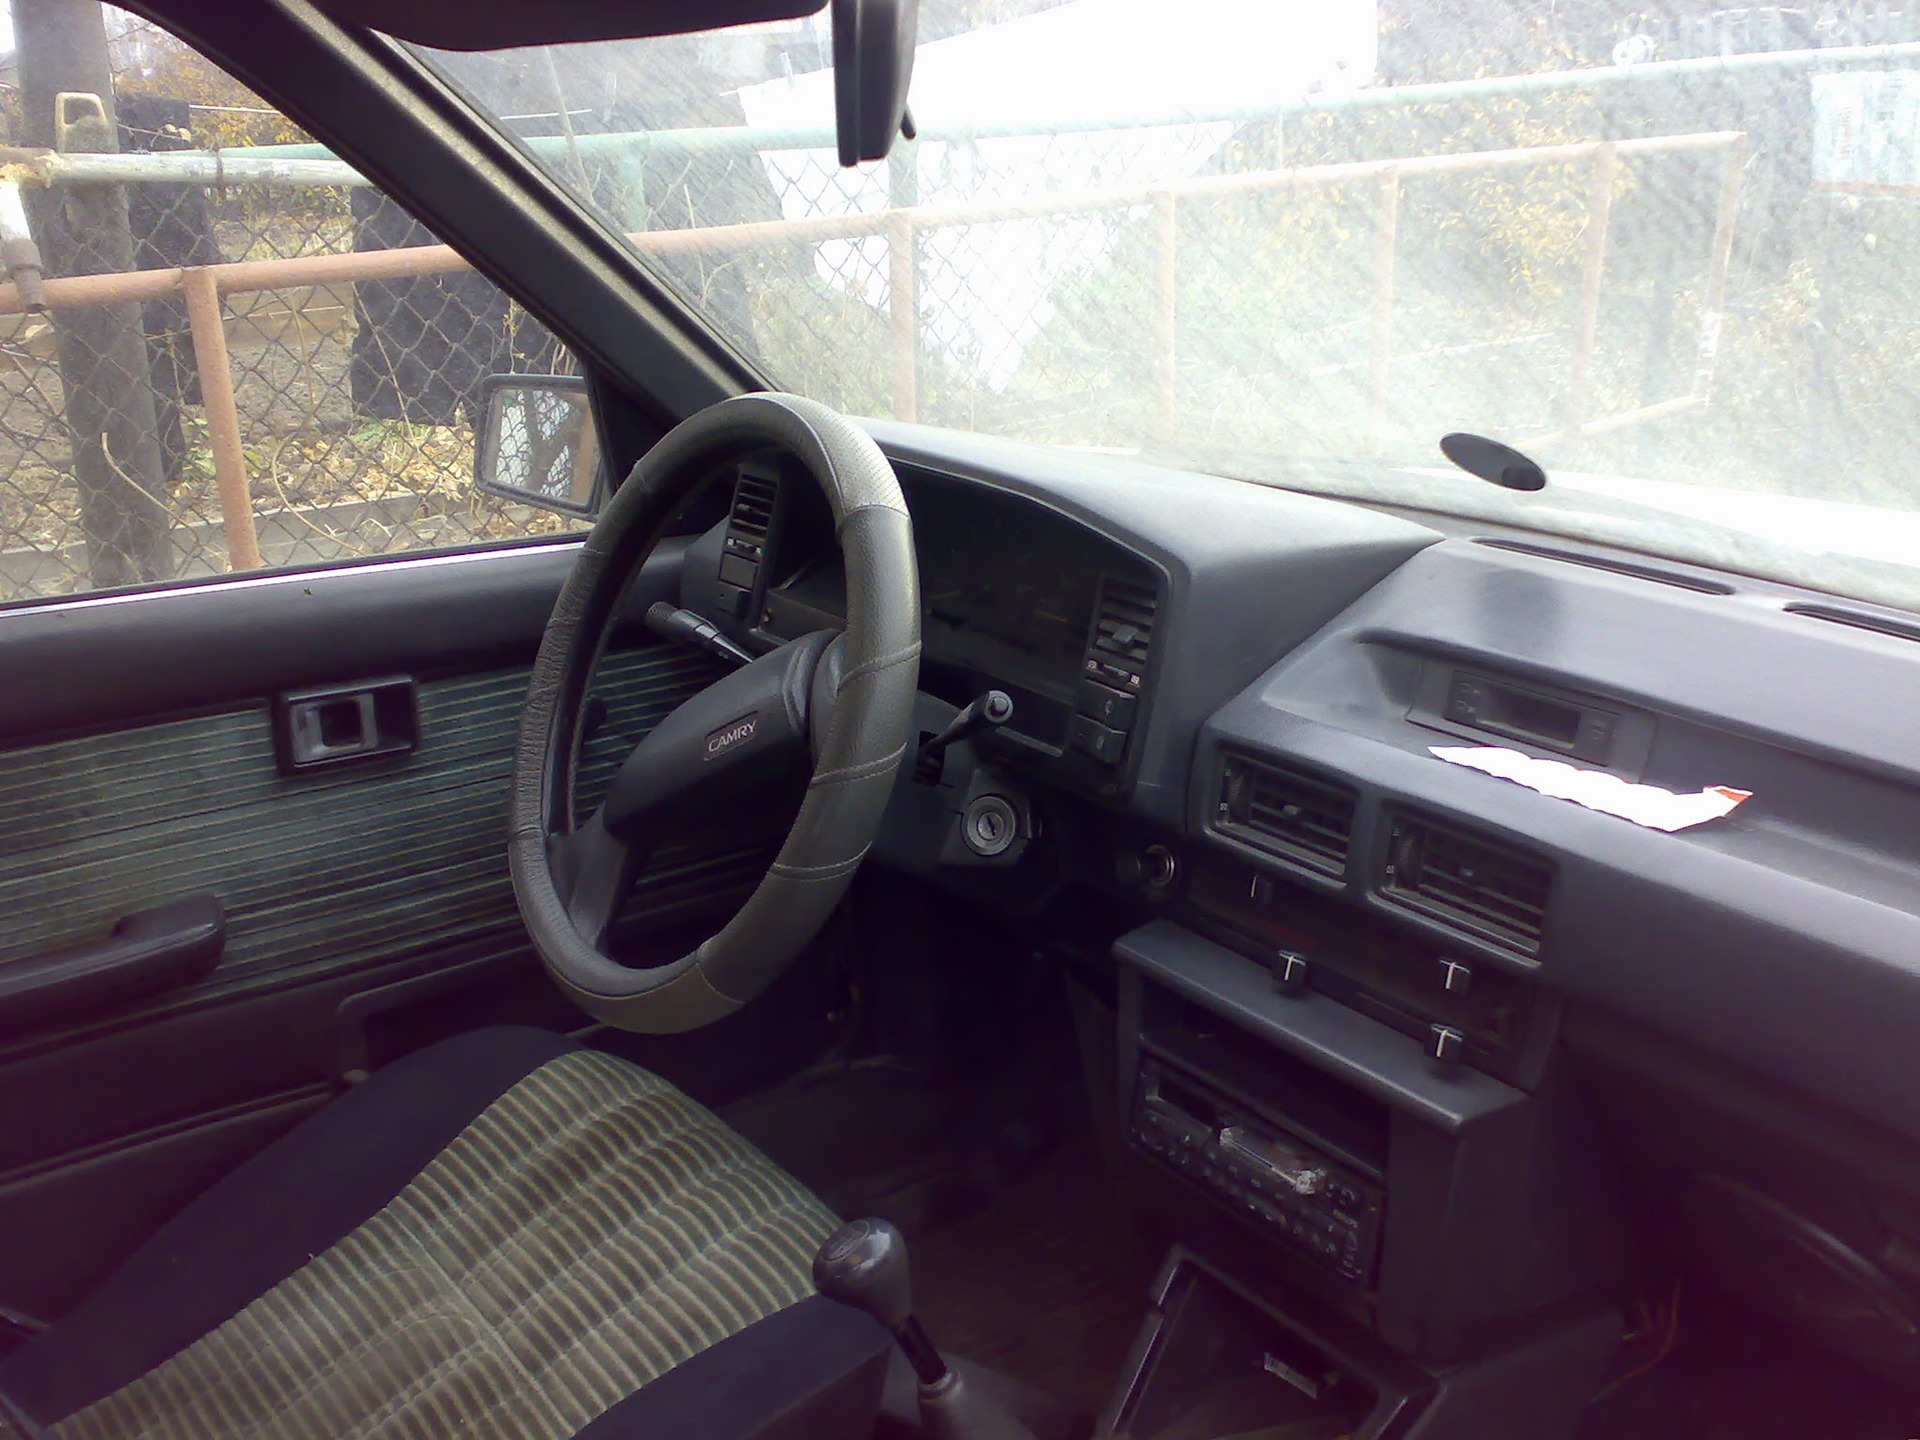    Toyota Corolla 13 1986